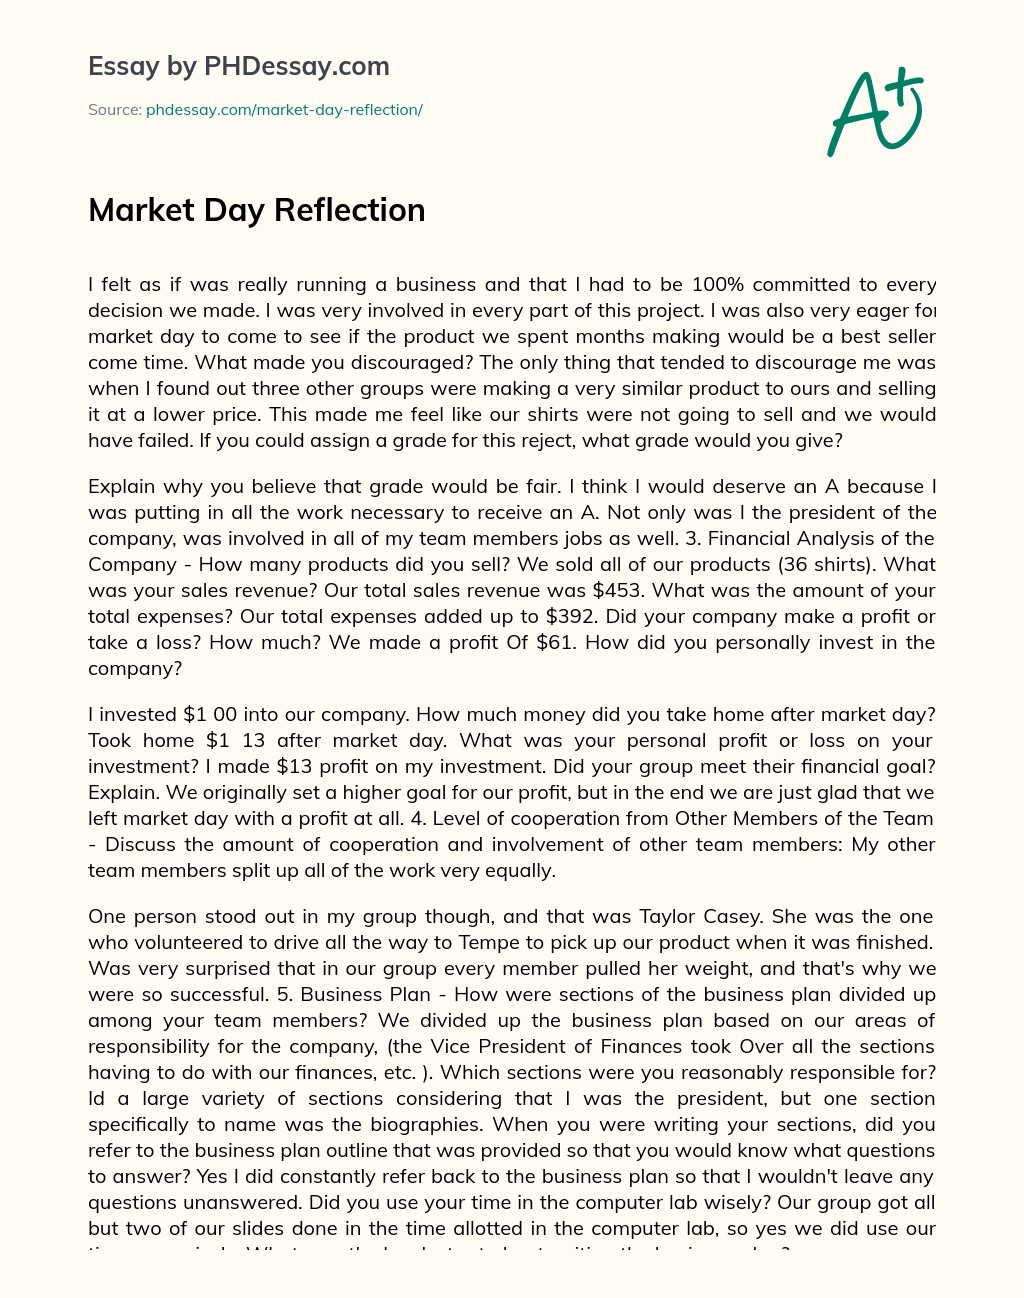 Market Day Reflection essay